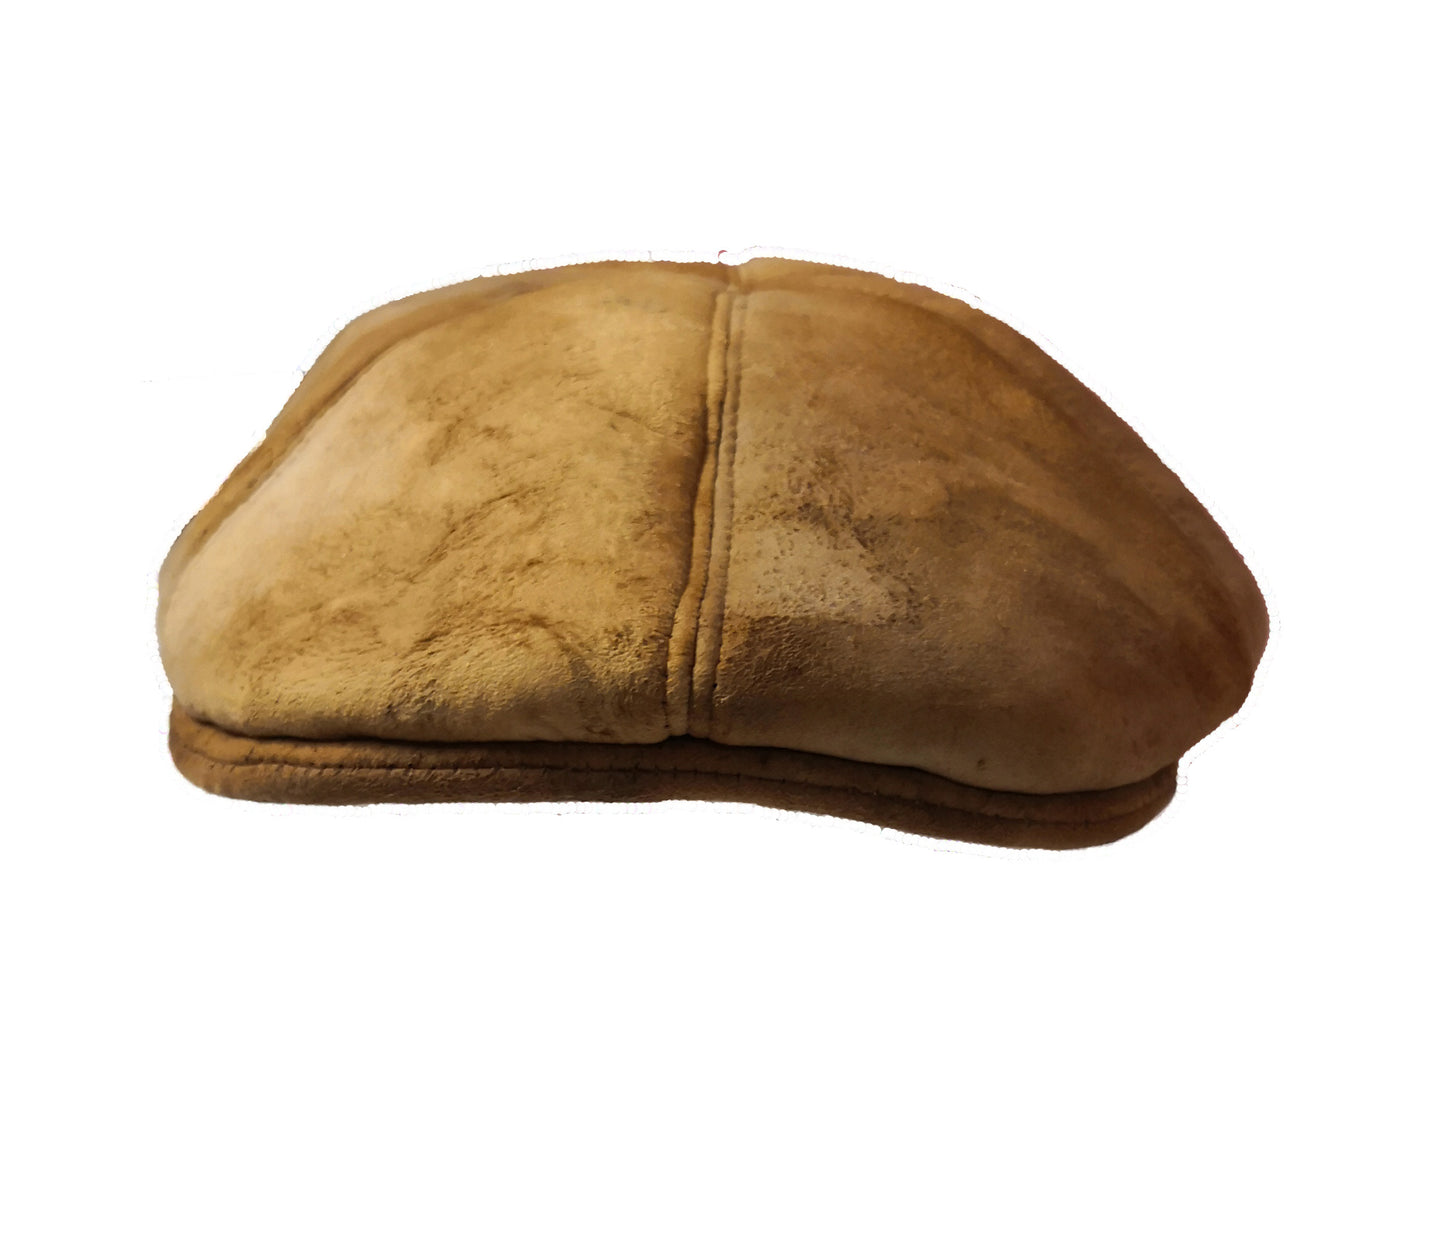 Amadou flat cap - mushroom hat/beret/new boys cap